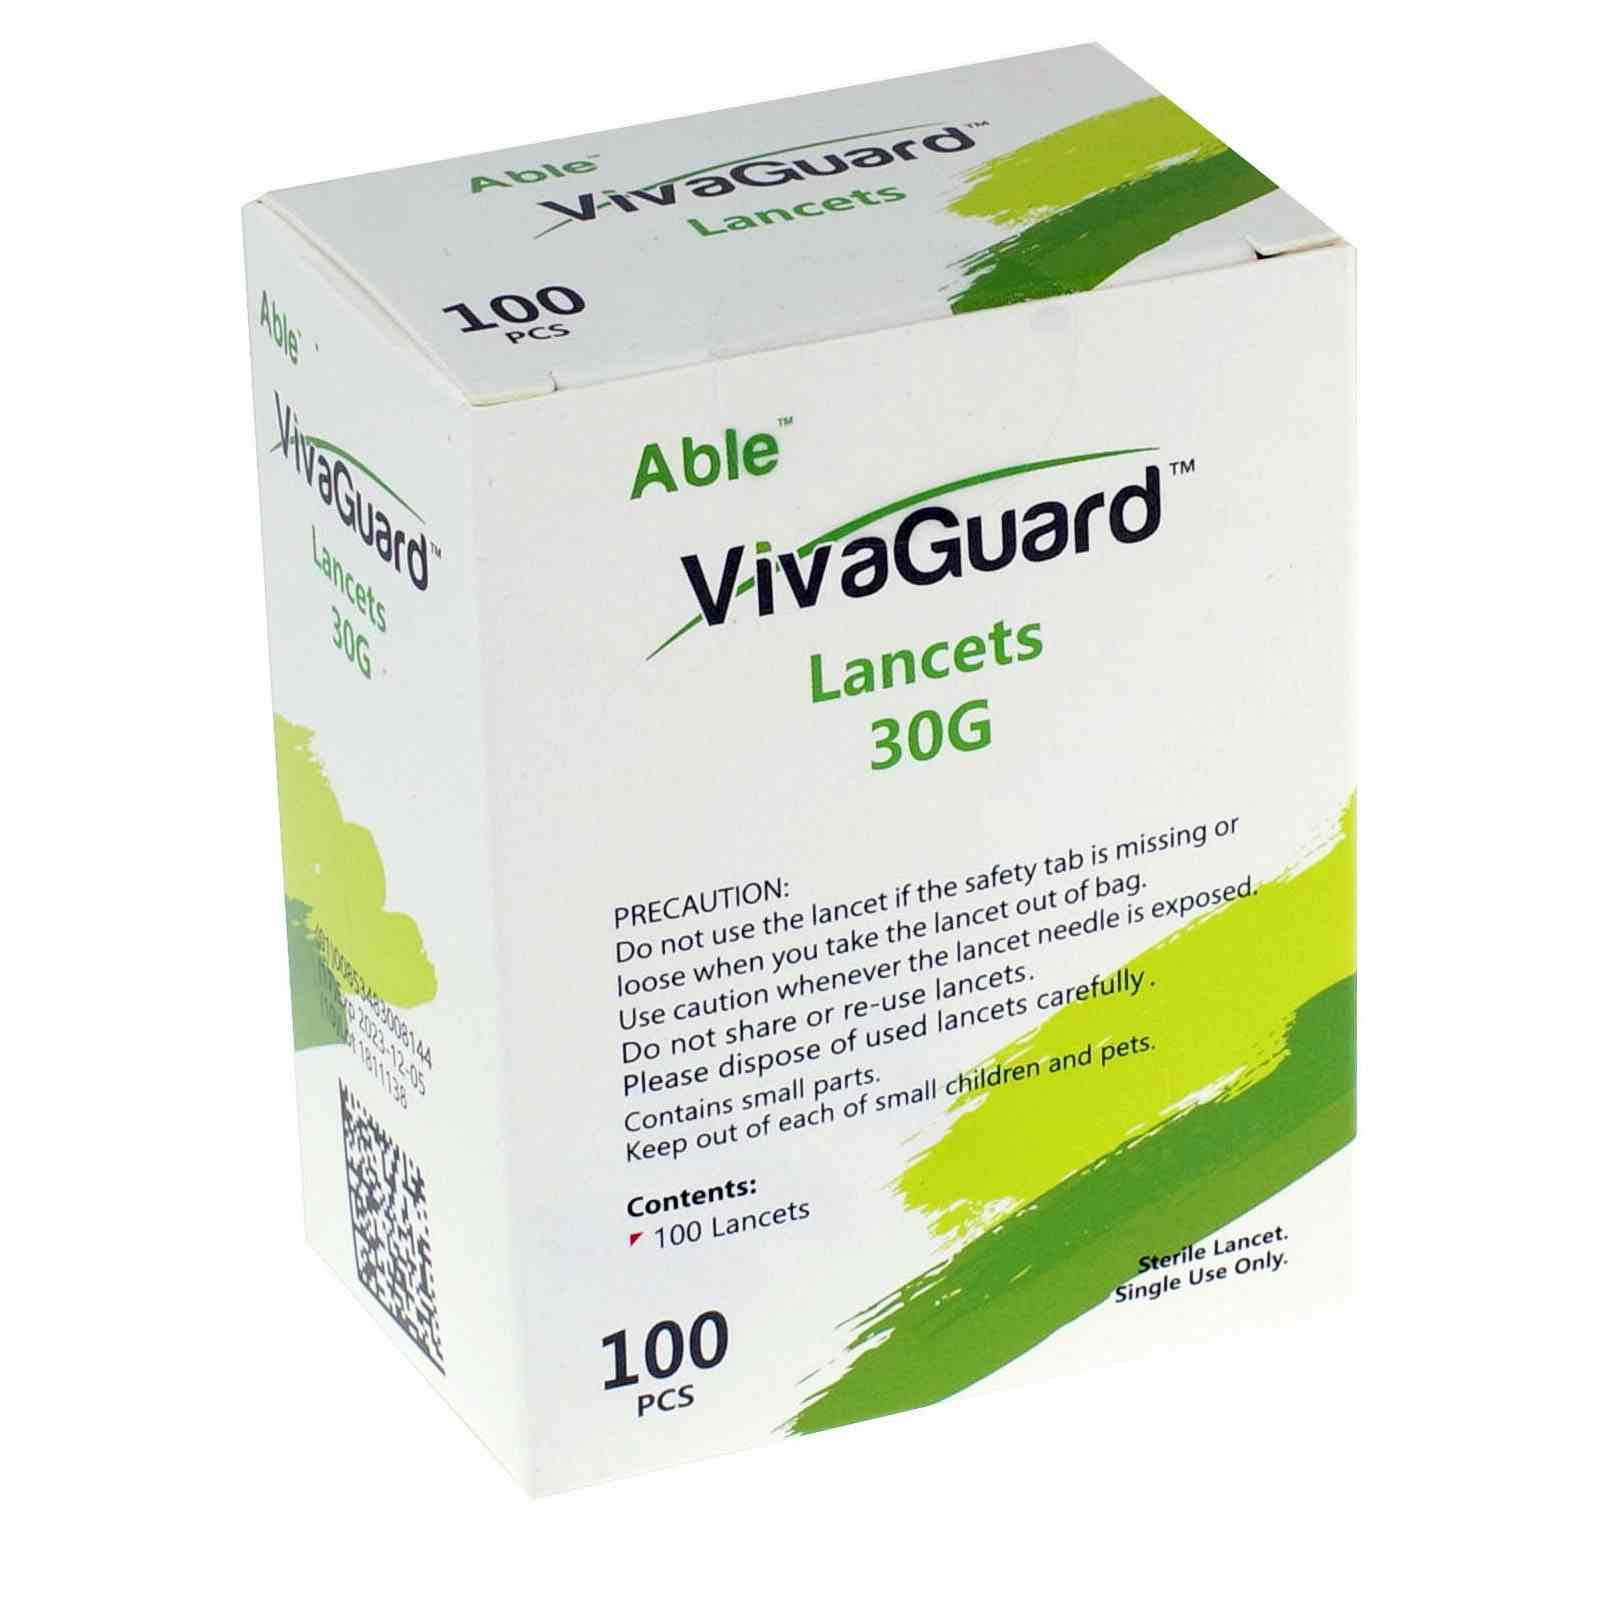 Able VivaGuard Lancets, 30G, VGL01-383, Box of 100